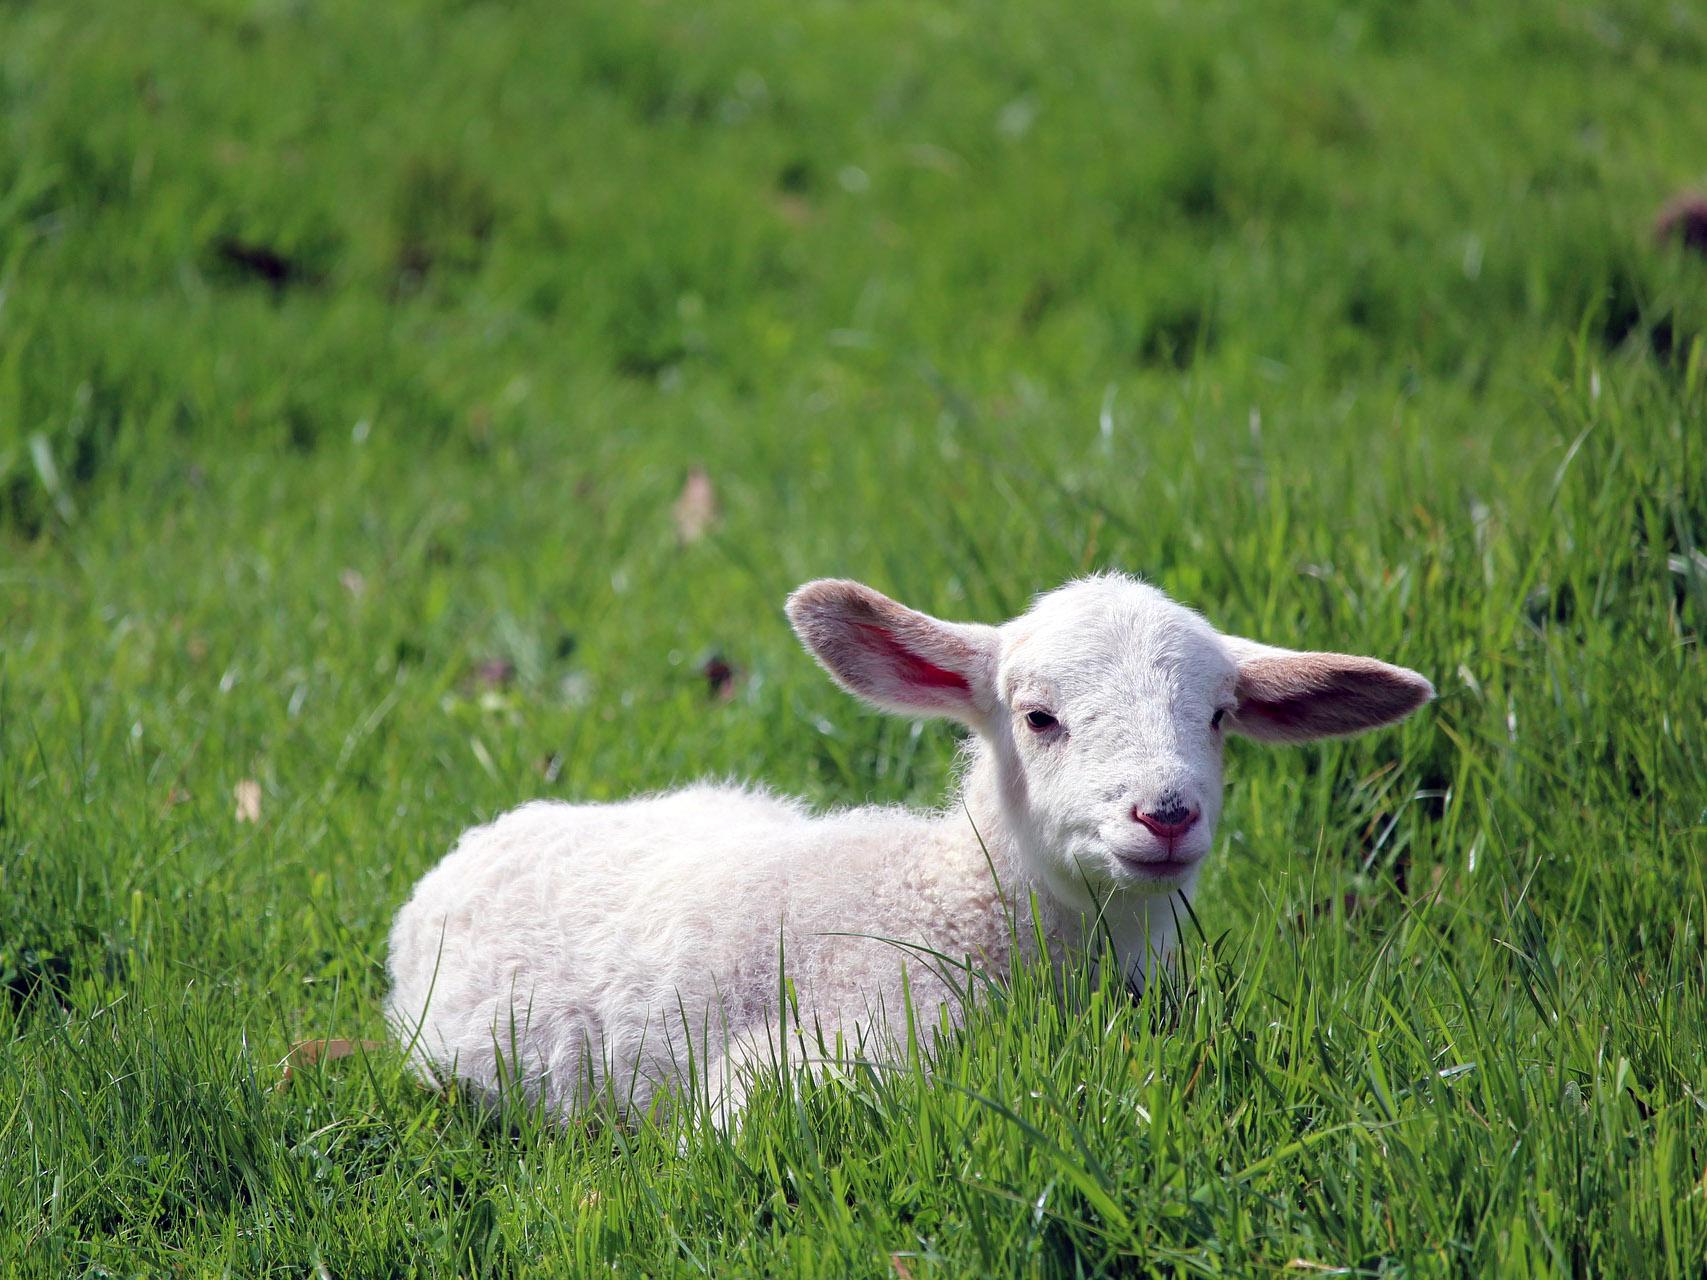 Lamb sitting in grass